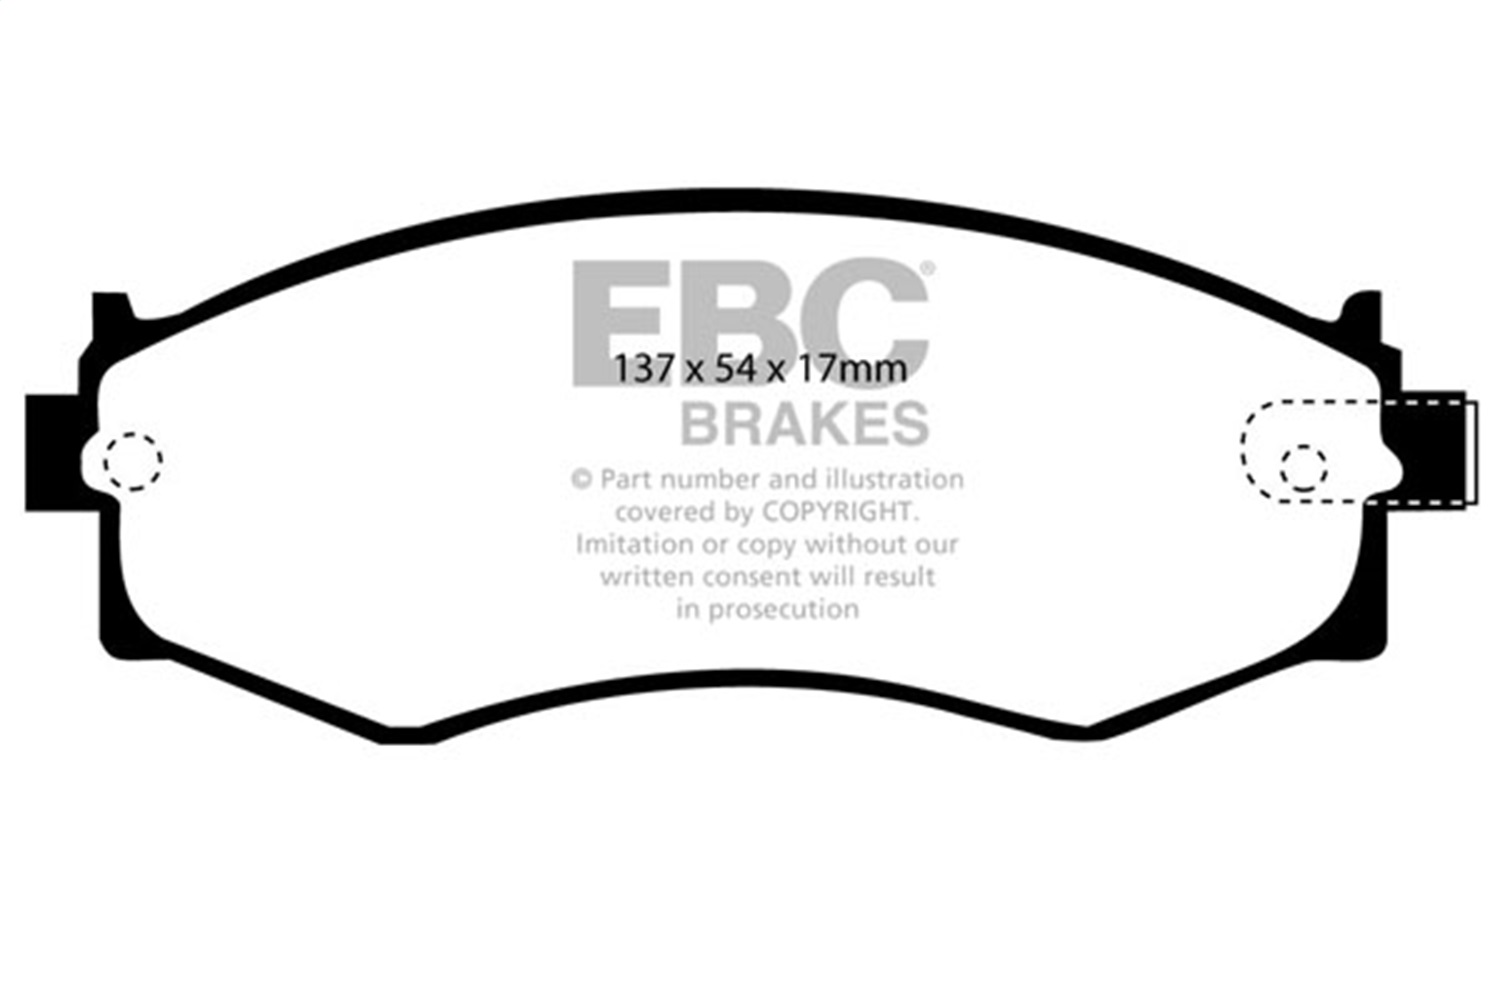 EBC Brakes UD485 Ultimax  Brake Pads Fits 89-06 240SX G20 Sentra Stanza